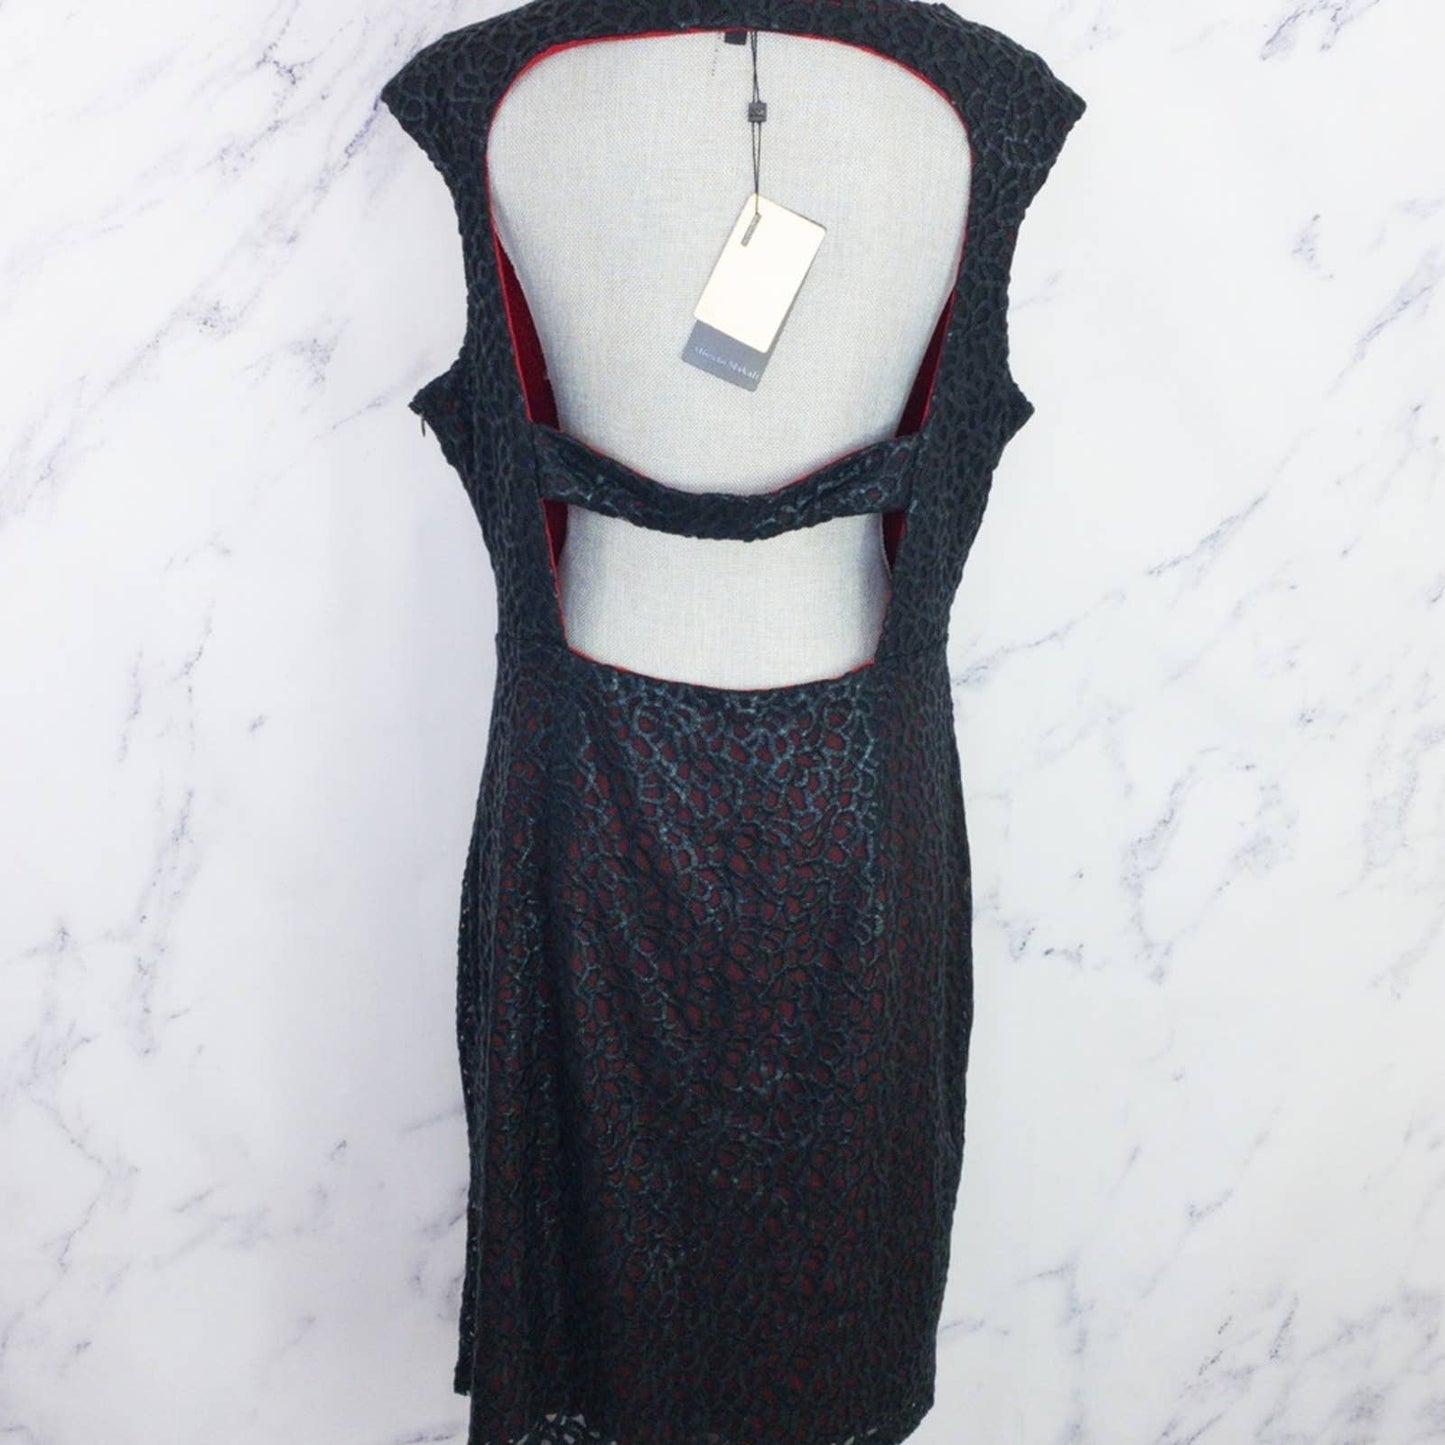 Alberto Makali | Lace Dress | Black/Red | XL